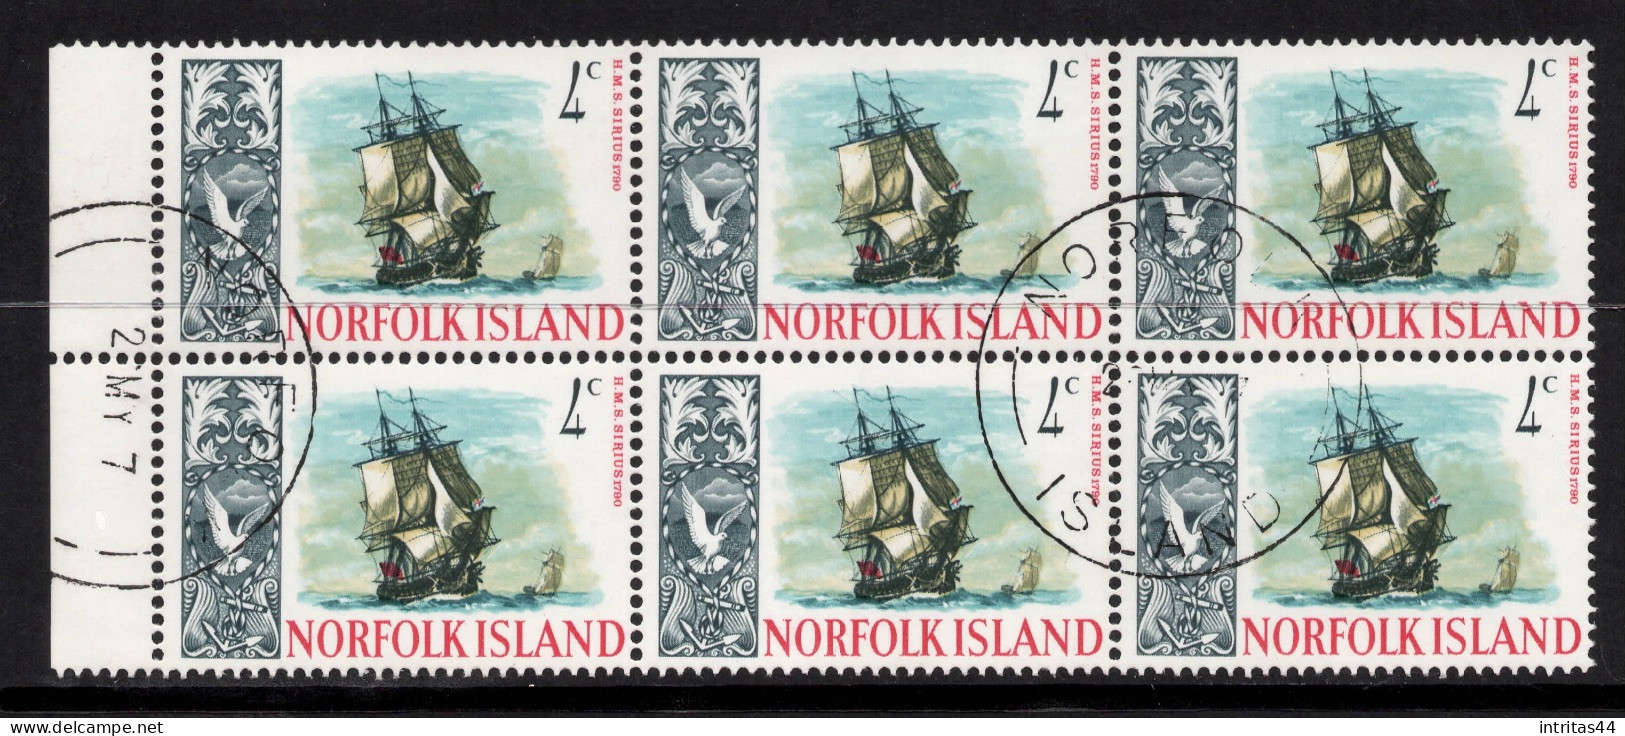 NORFOLK ISLAND 1967 SHIPS  4c "HMS SIRIUS 1790 " SELVEDGE  BLOCK OF (6) CTO - Norfolk Island